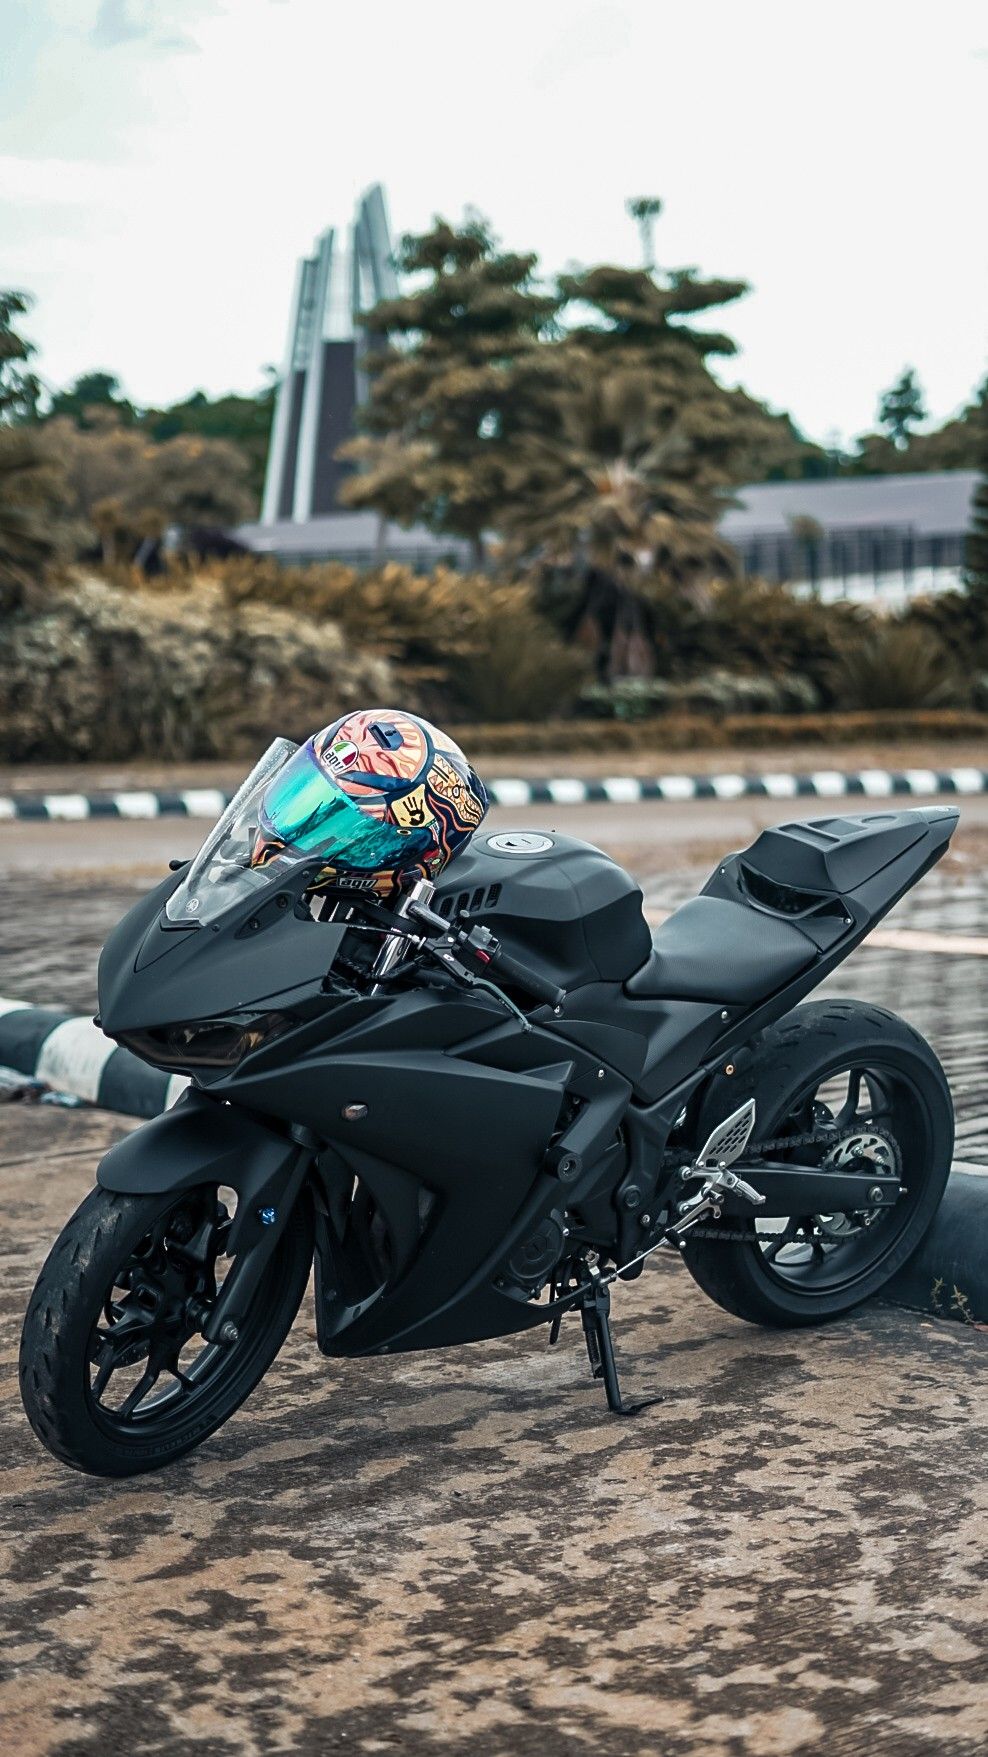 Foto Motor Ninja